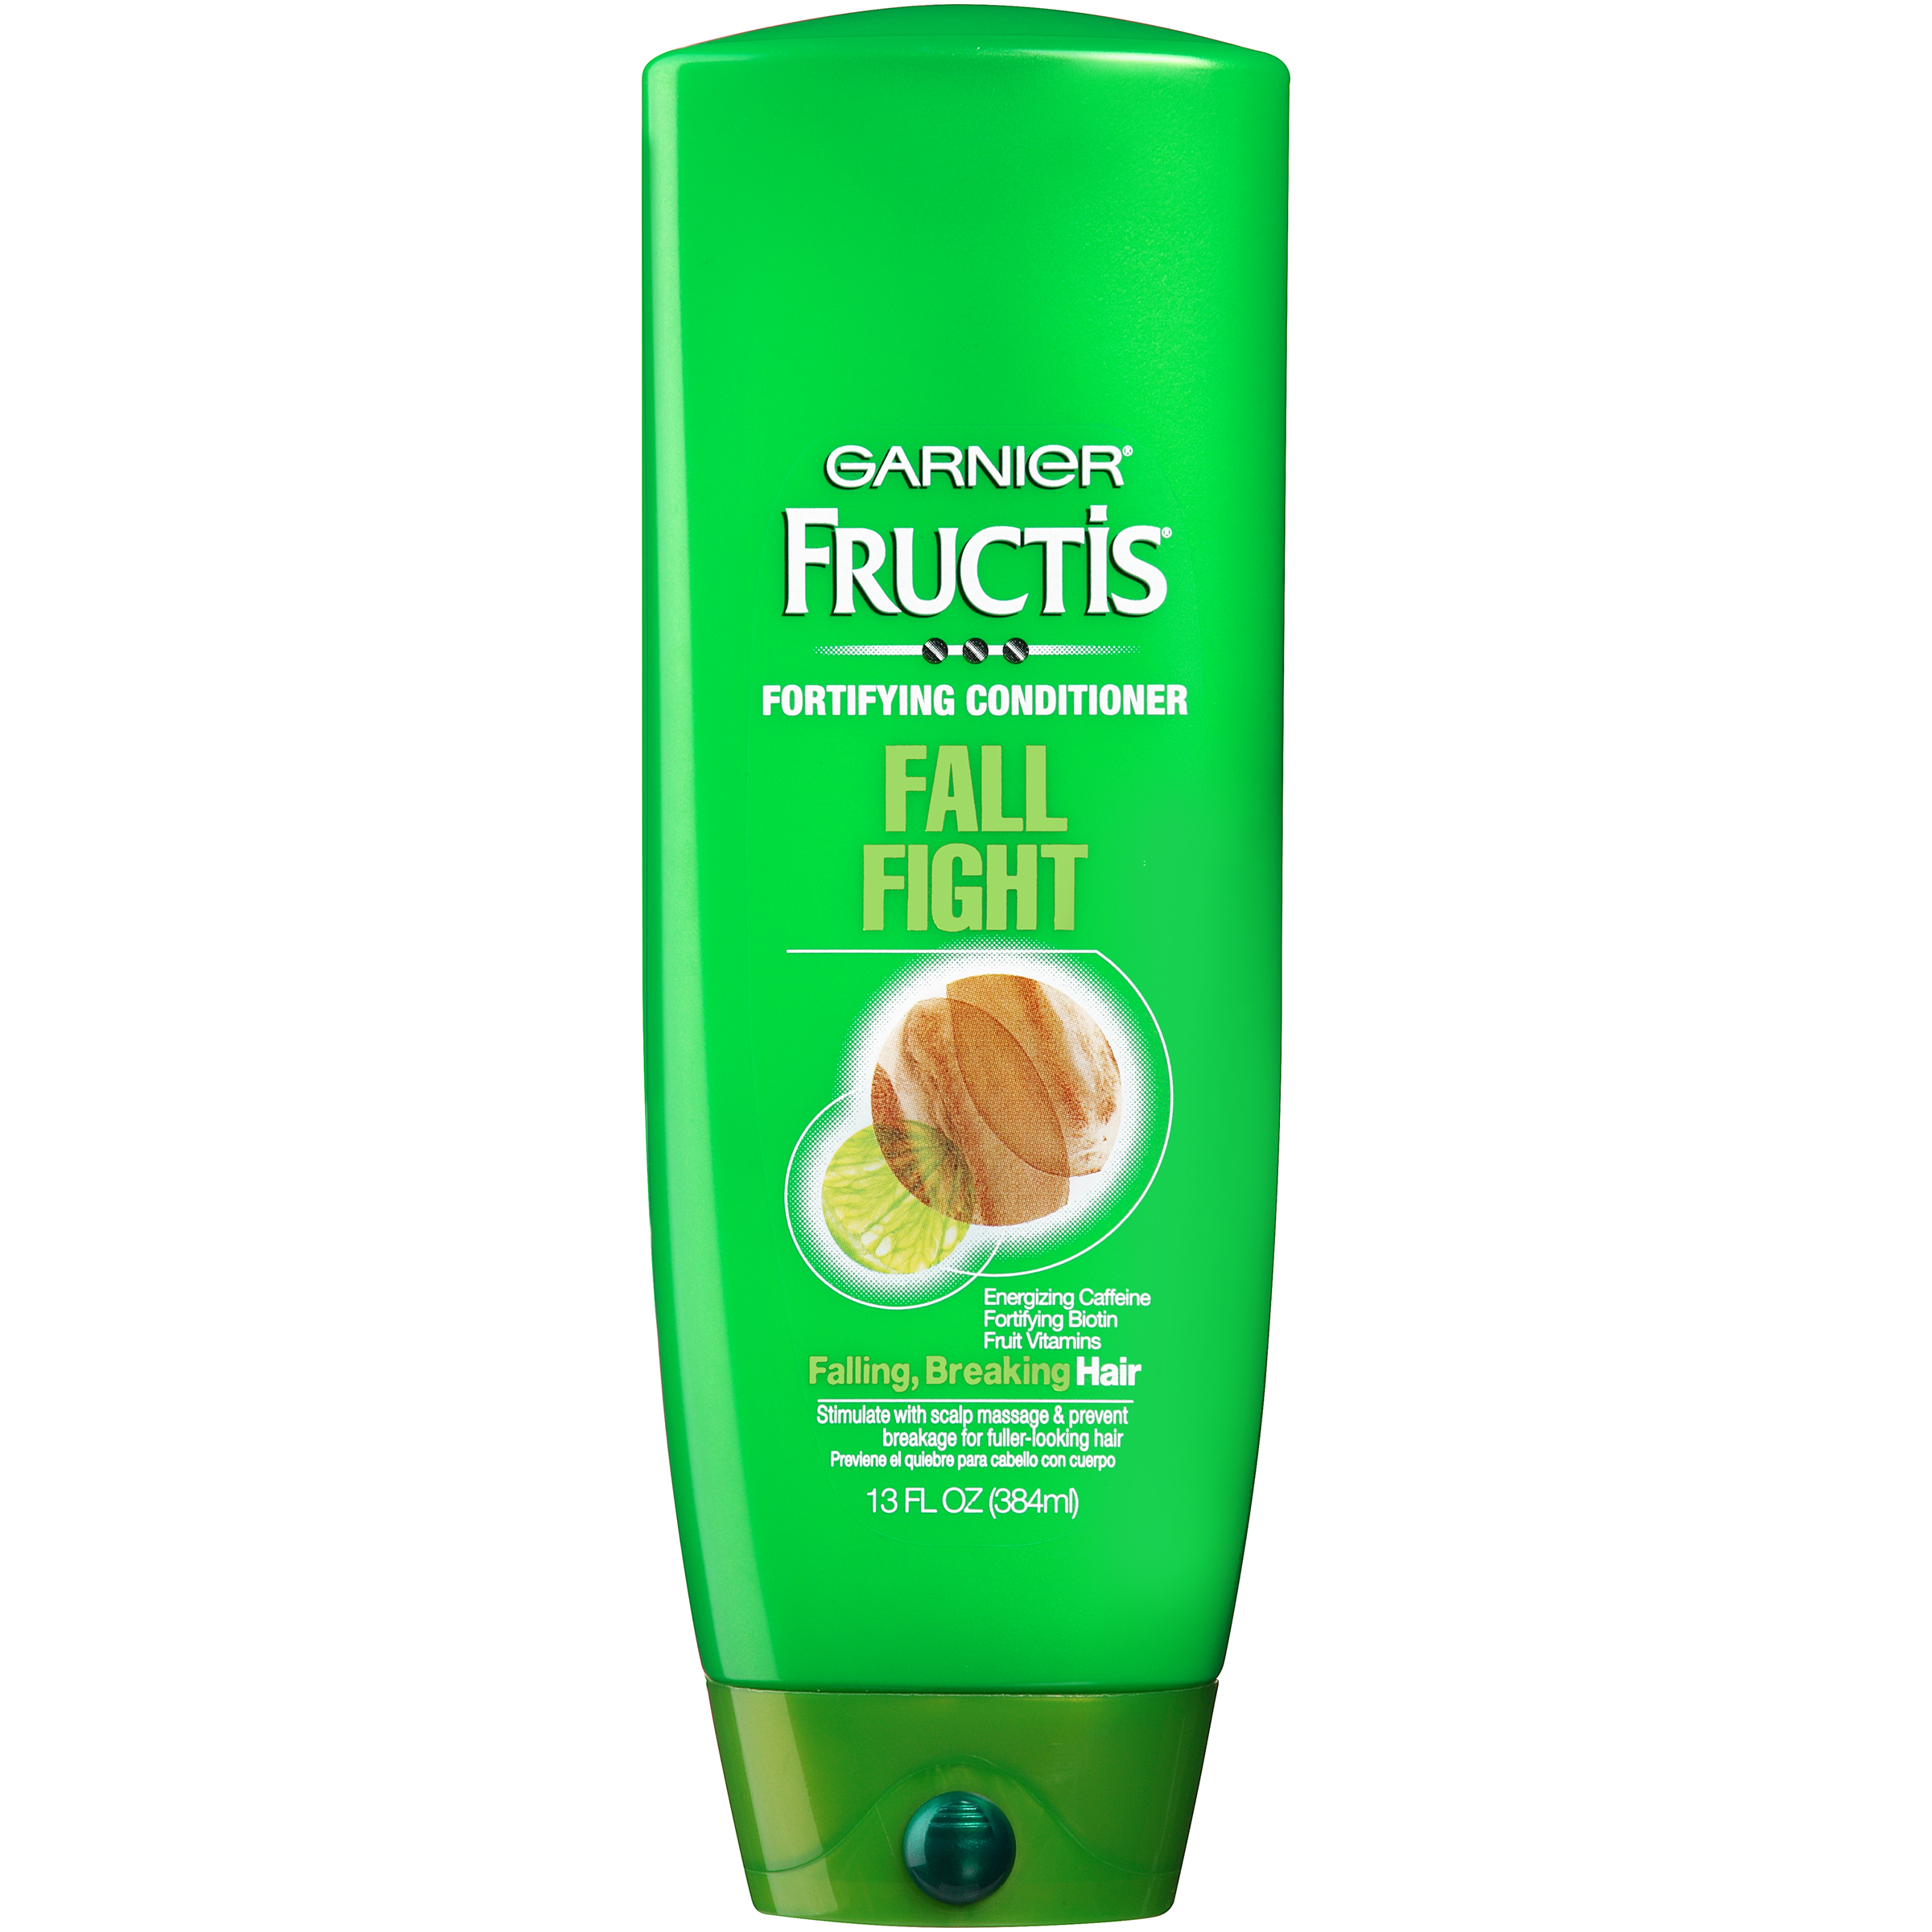 Garnier Fructis Fortifying Conditioner, Fall Fight, 13 fl oz (384 ml)